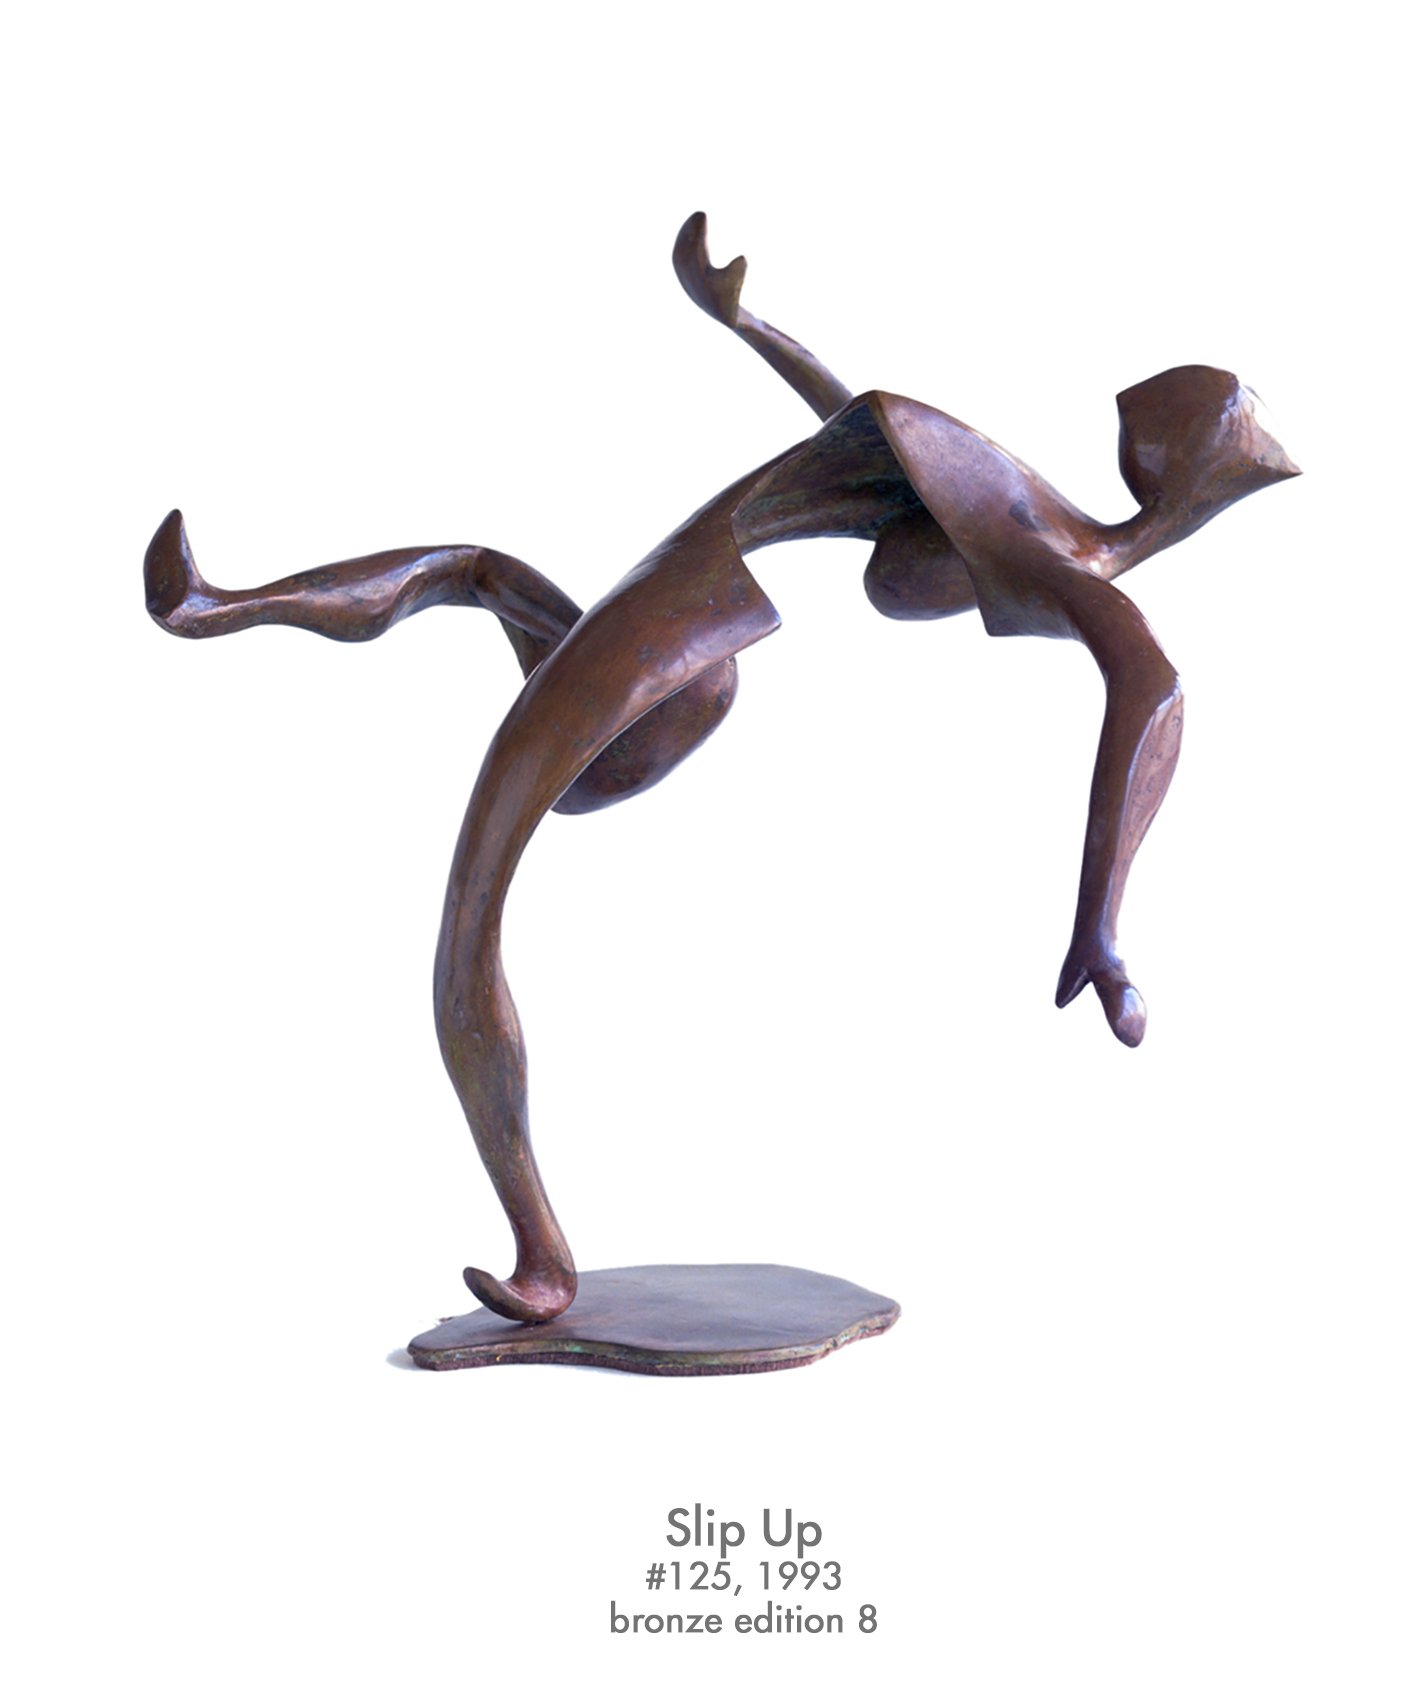 Slip Up, 1993, bronze, #125